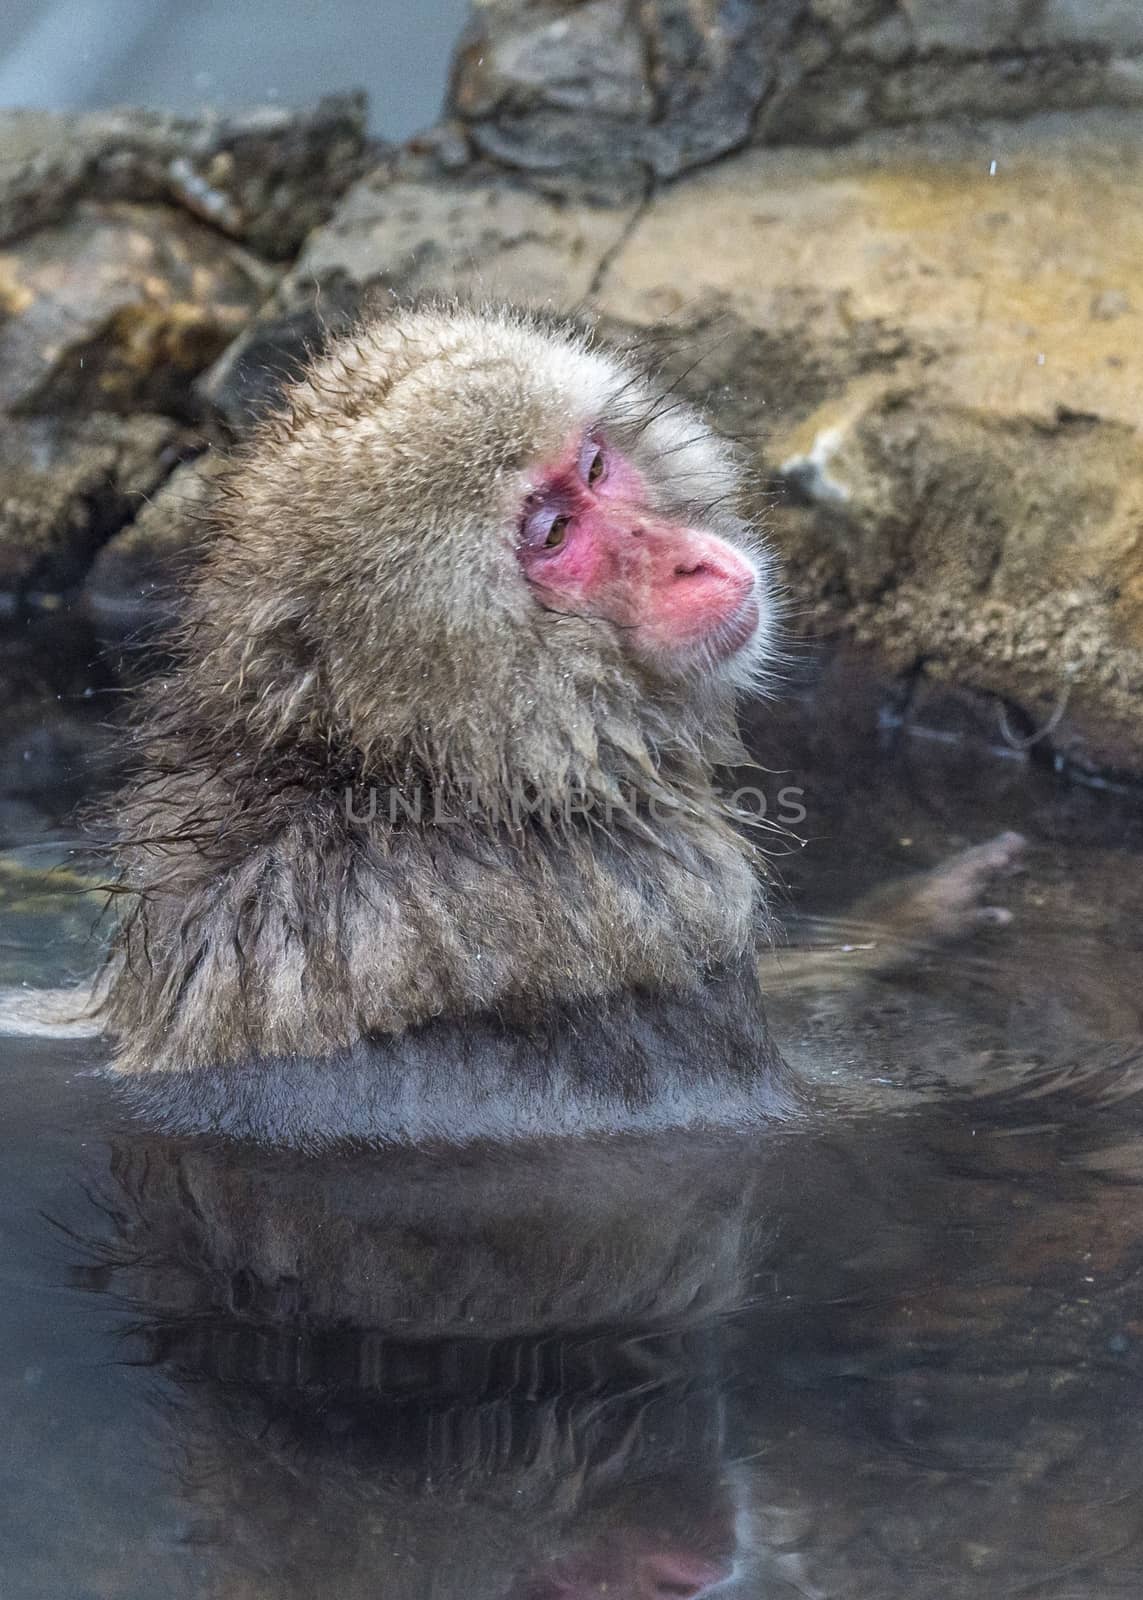 The Snow Monkey (Japanese macaque) enjoyed the hot spring in winter at Jigokudani Monkey Park of Nagano, Japan.